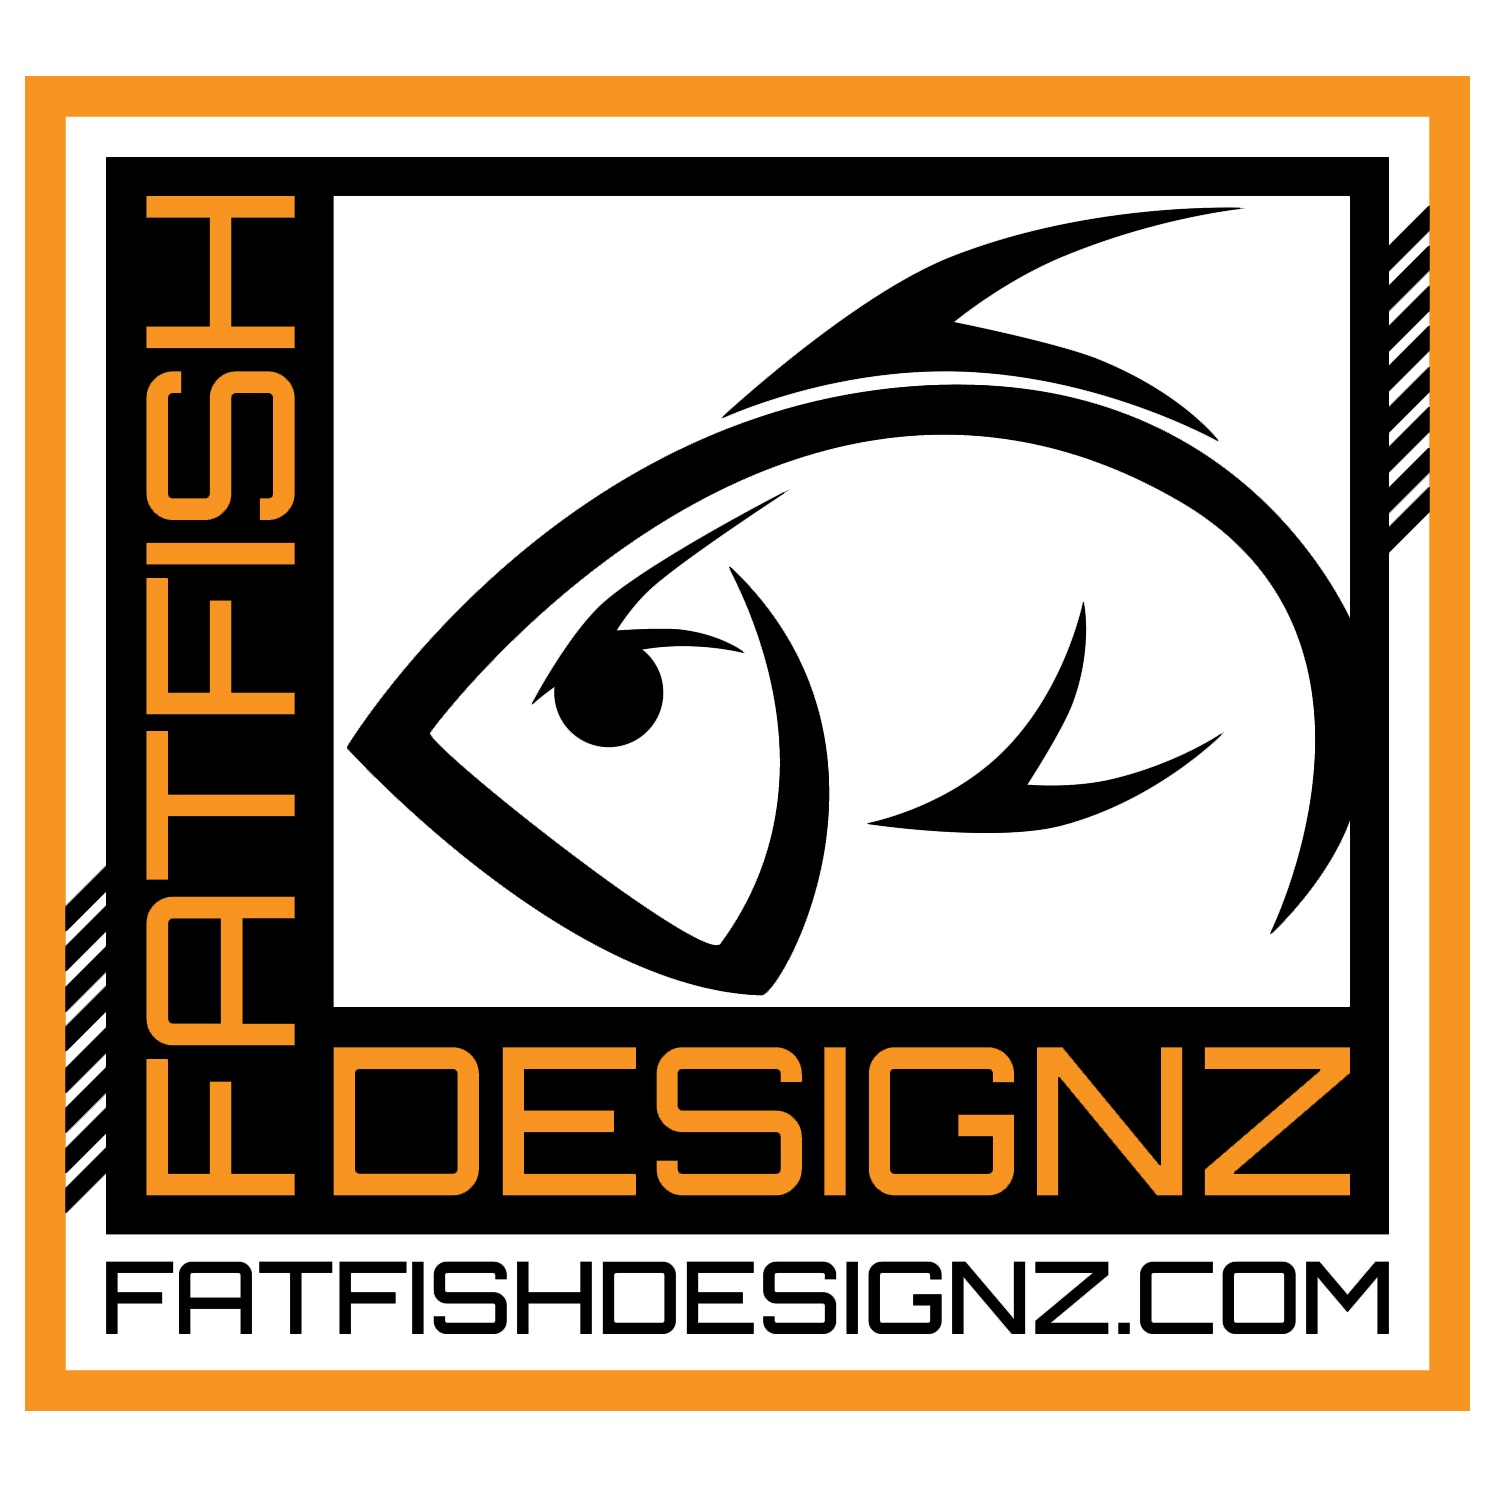 gift card - fat fish designz- fatfishdesignz.com